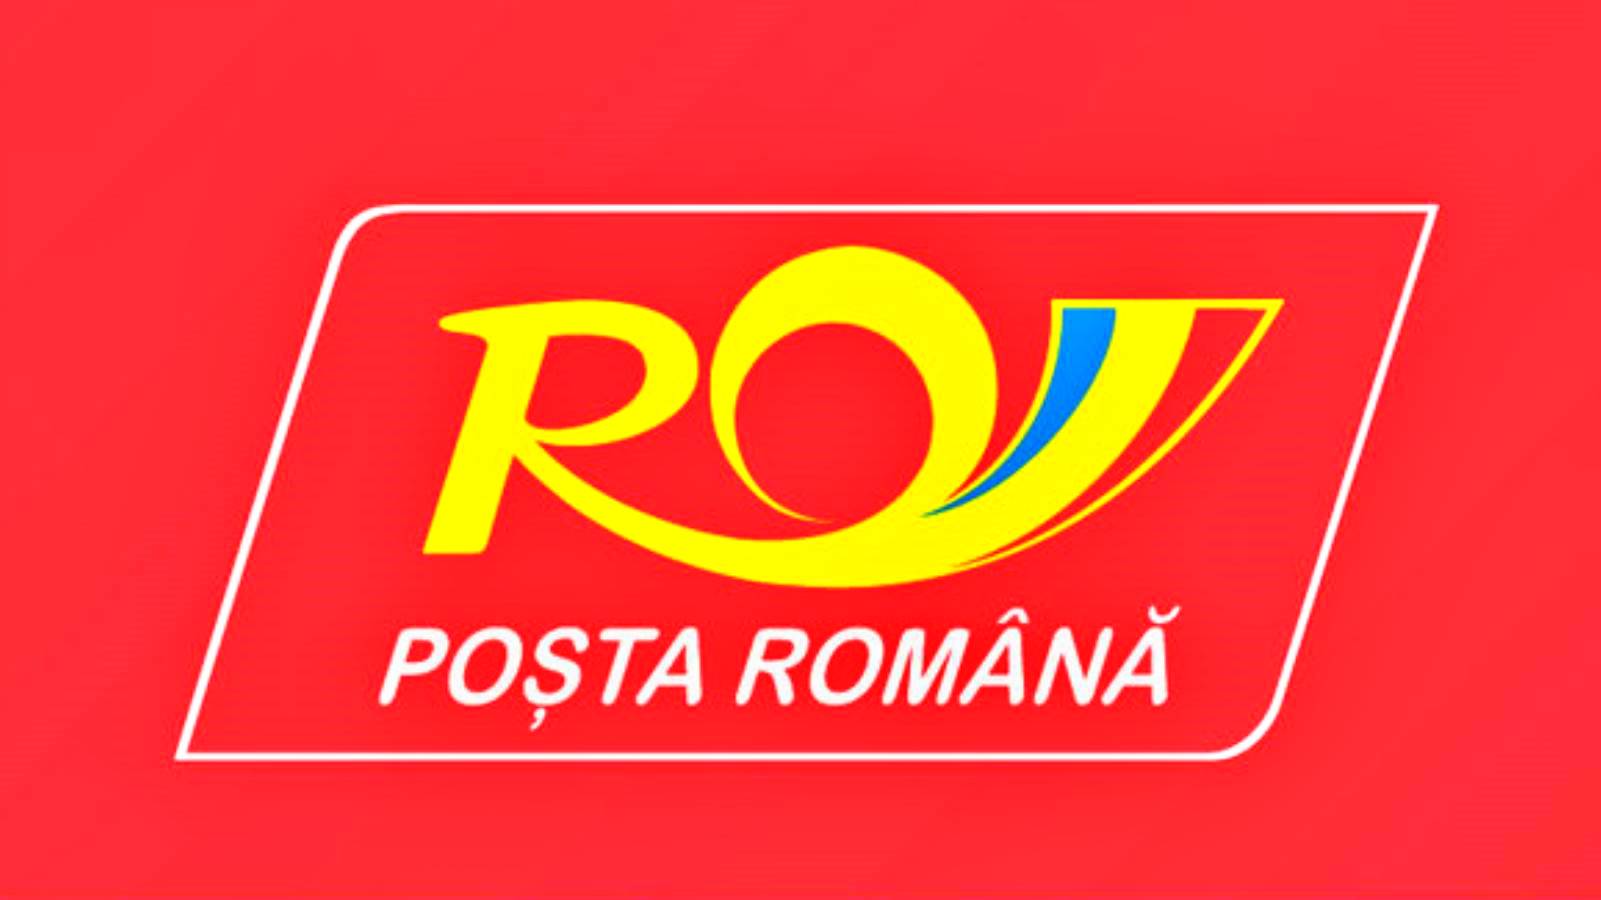 Zmiany legislacyjne Poczta rumuńska Uwaga Rumuni